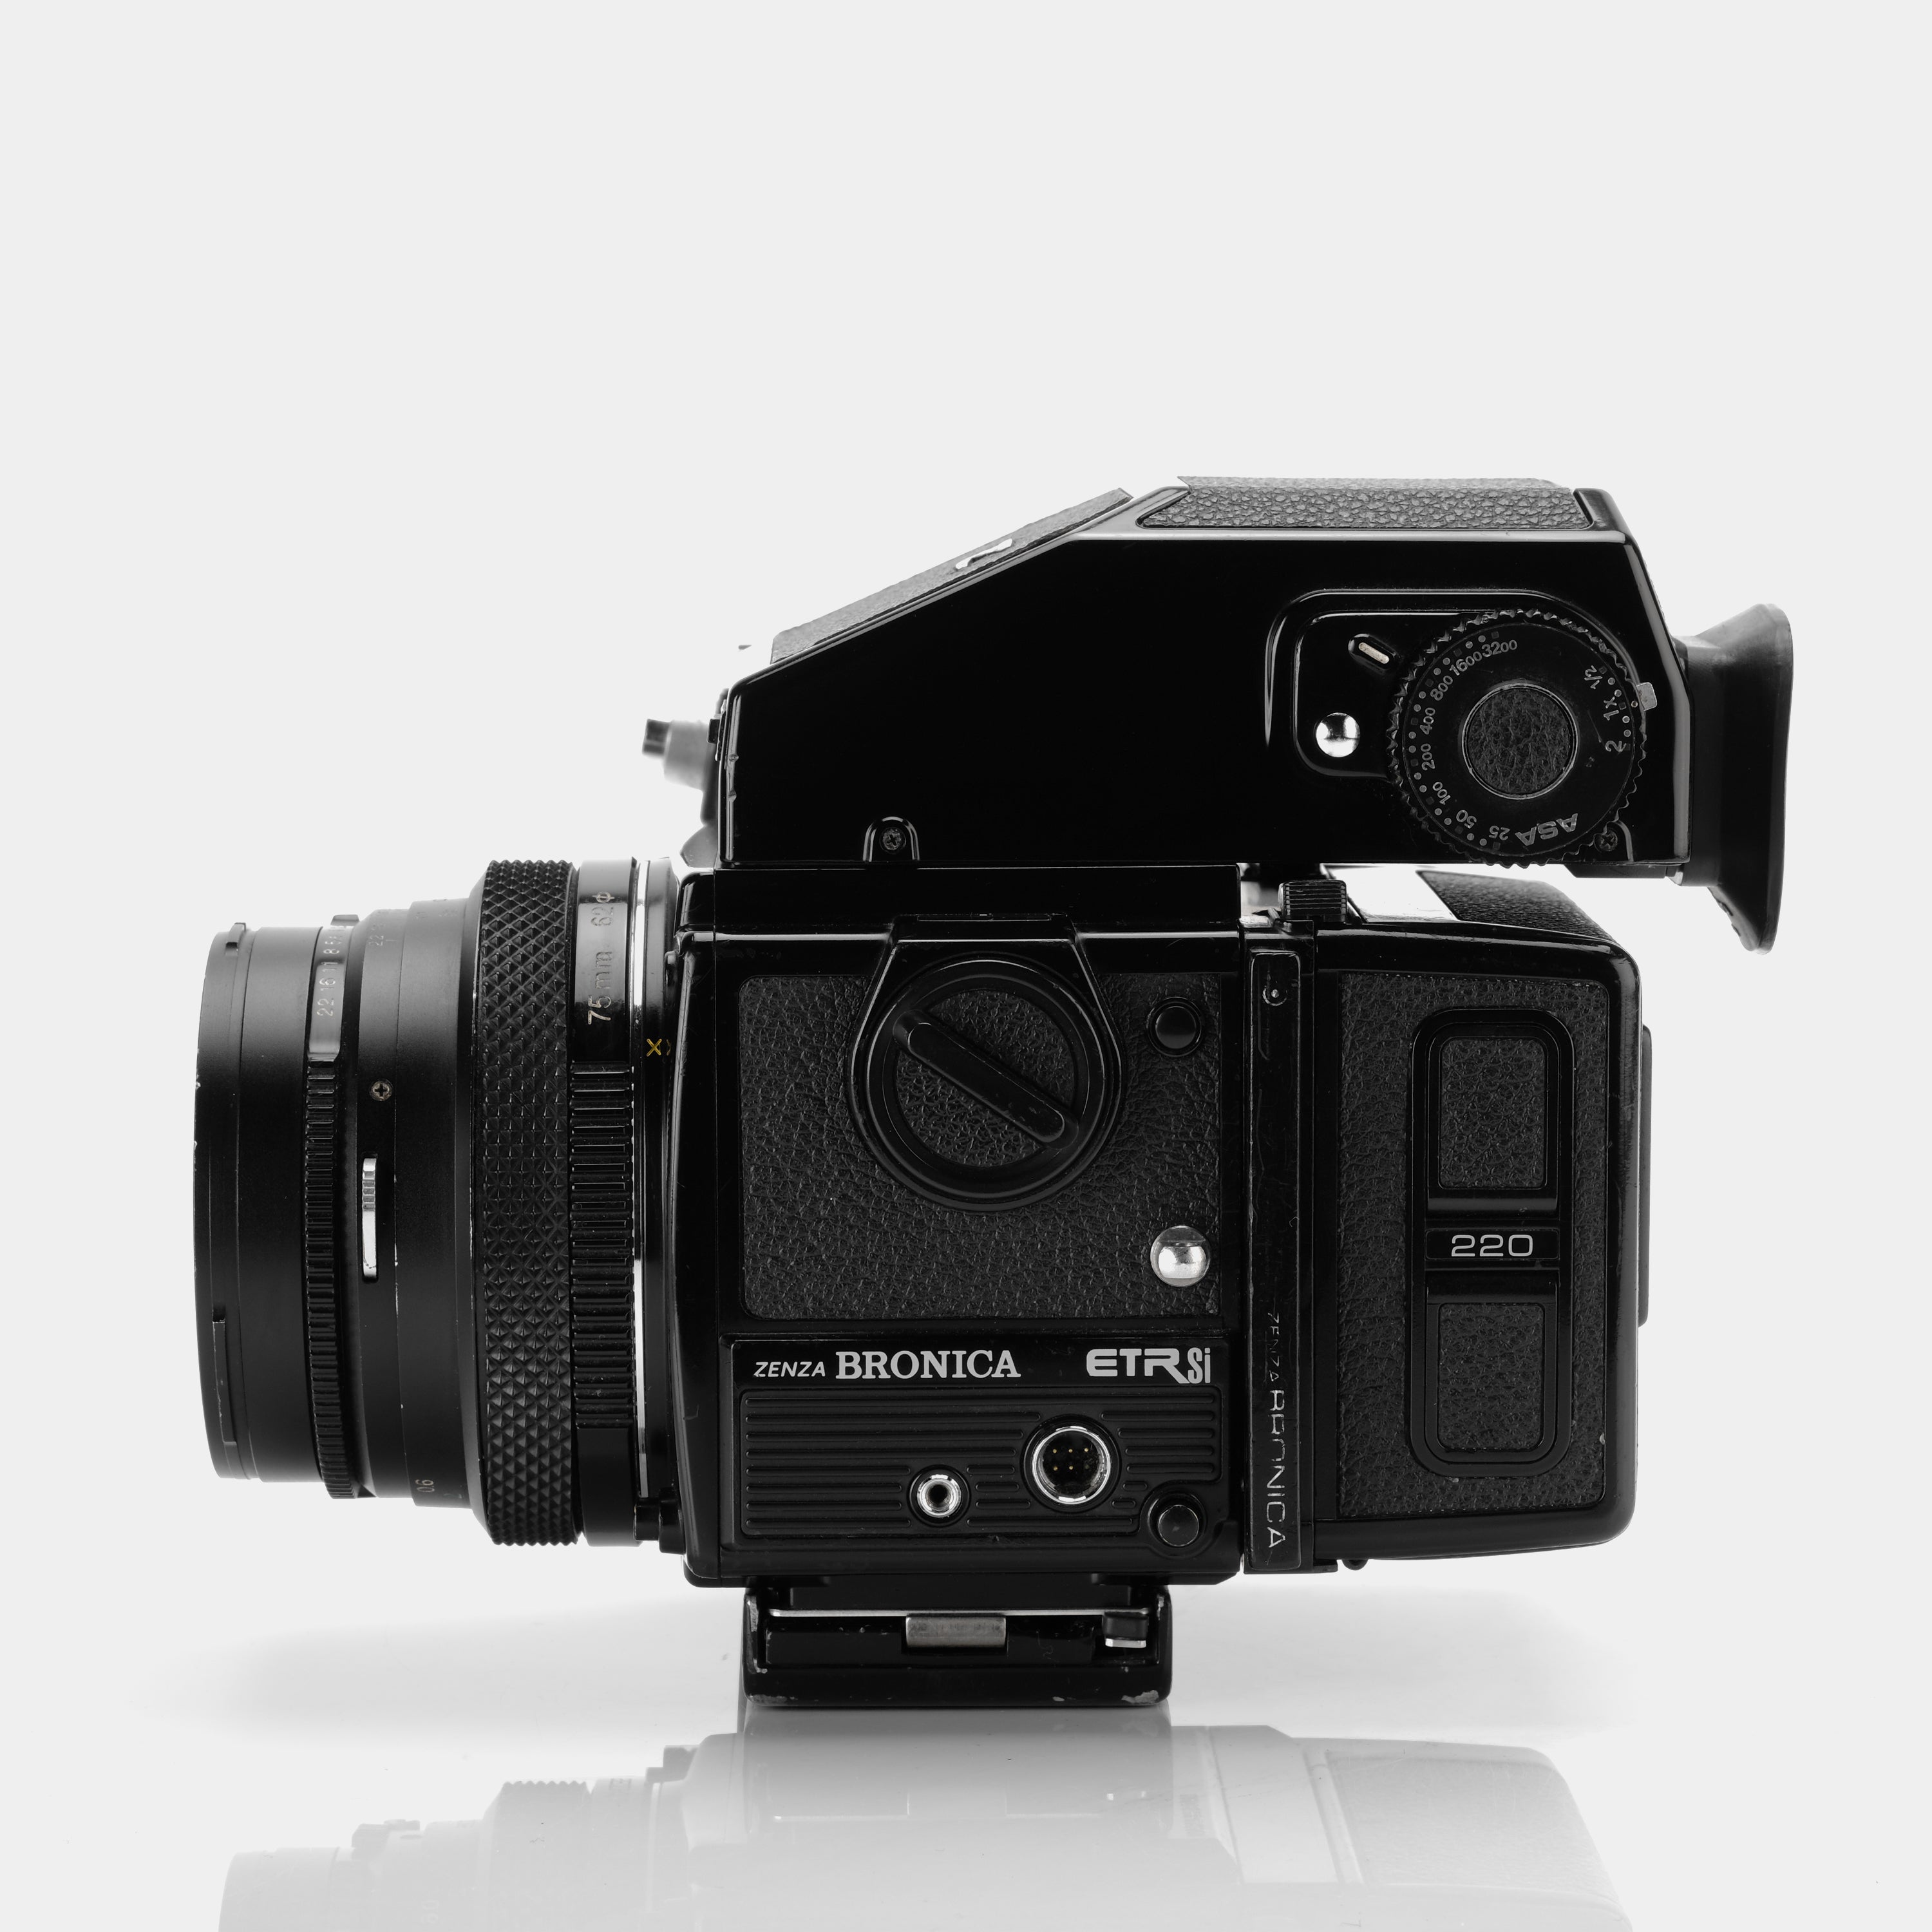 Bronica ETRSI SLR 120 Film Camera